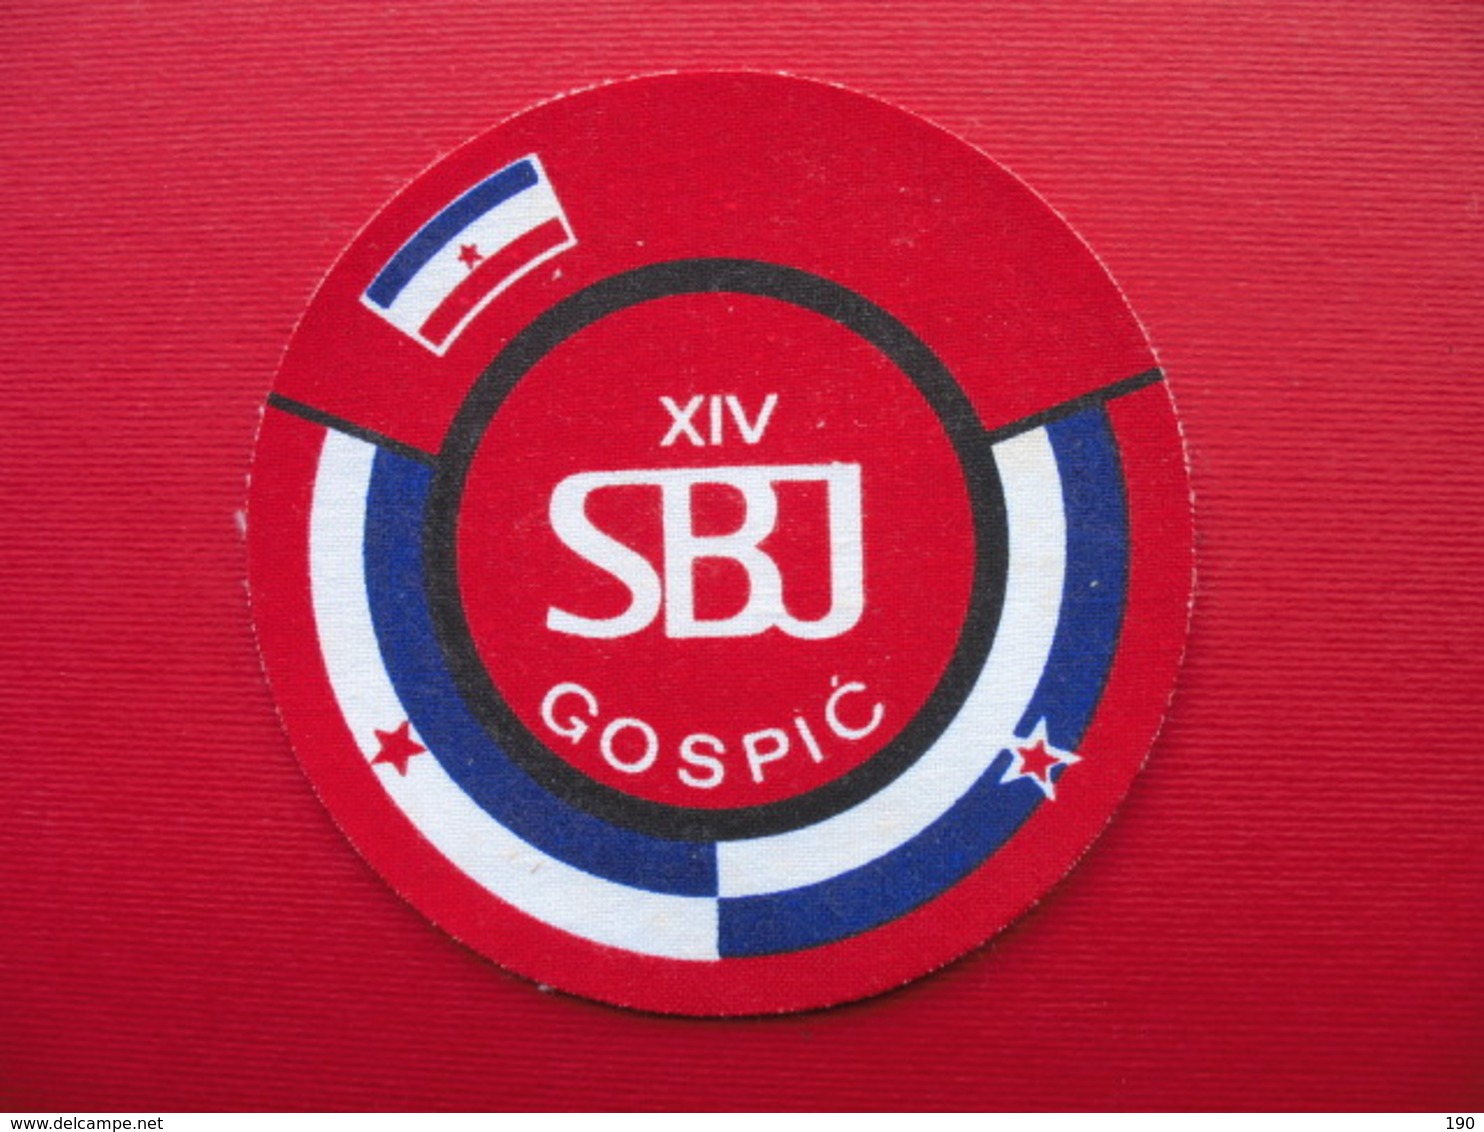 XIV SBJ GOSPIC - Ecussons Tissu